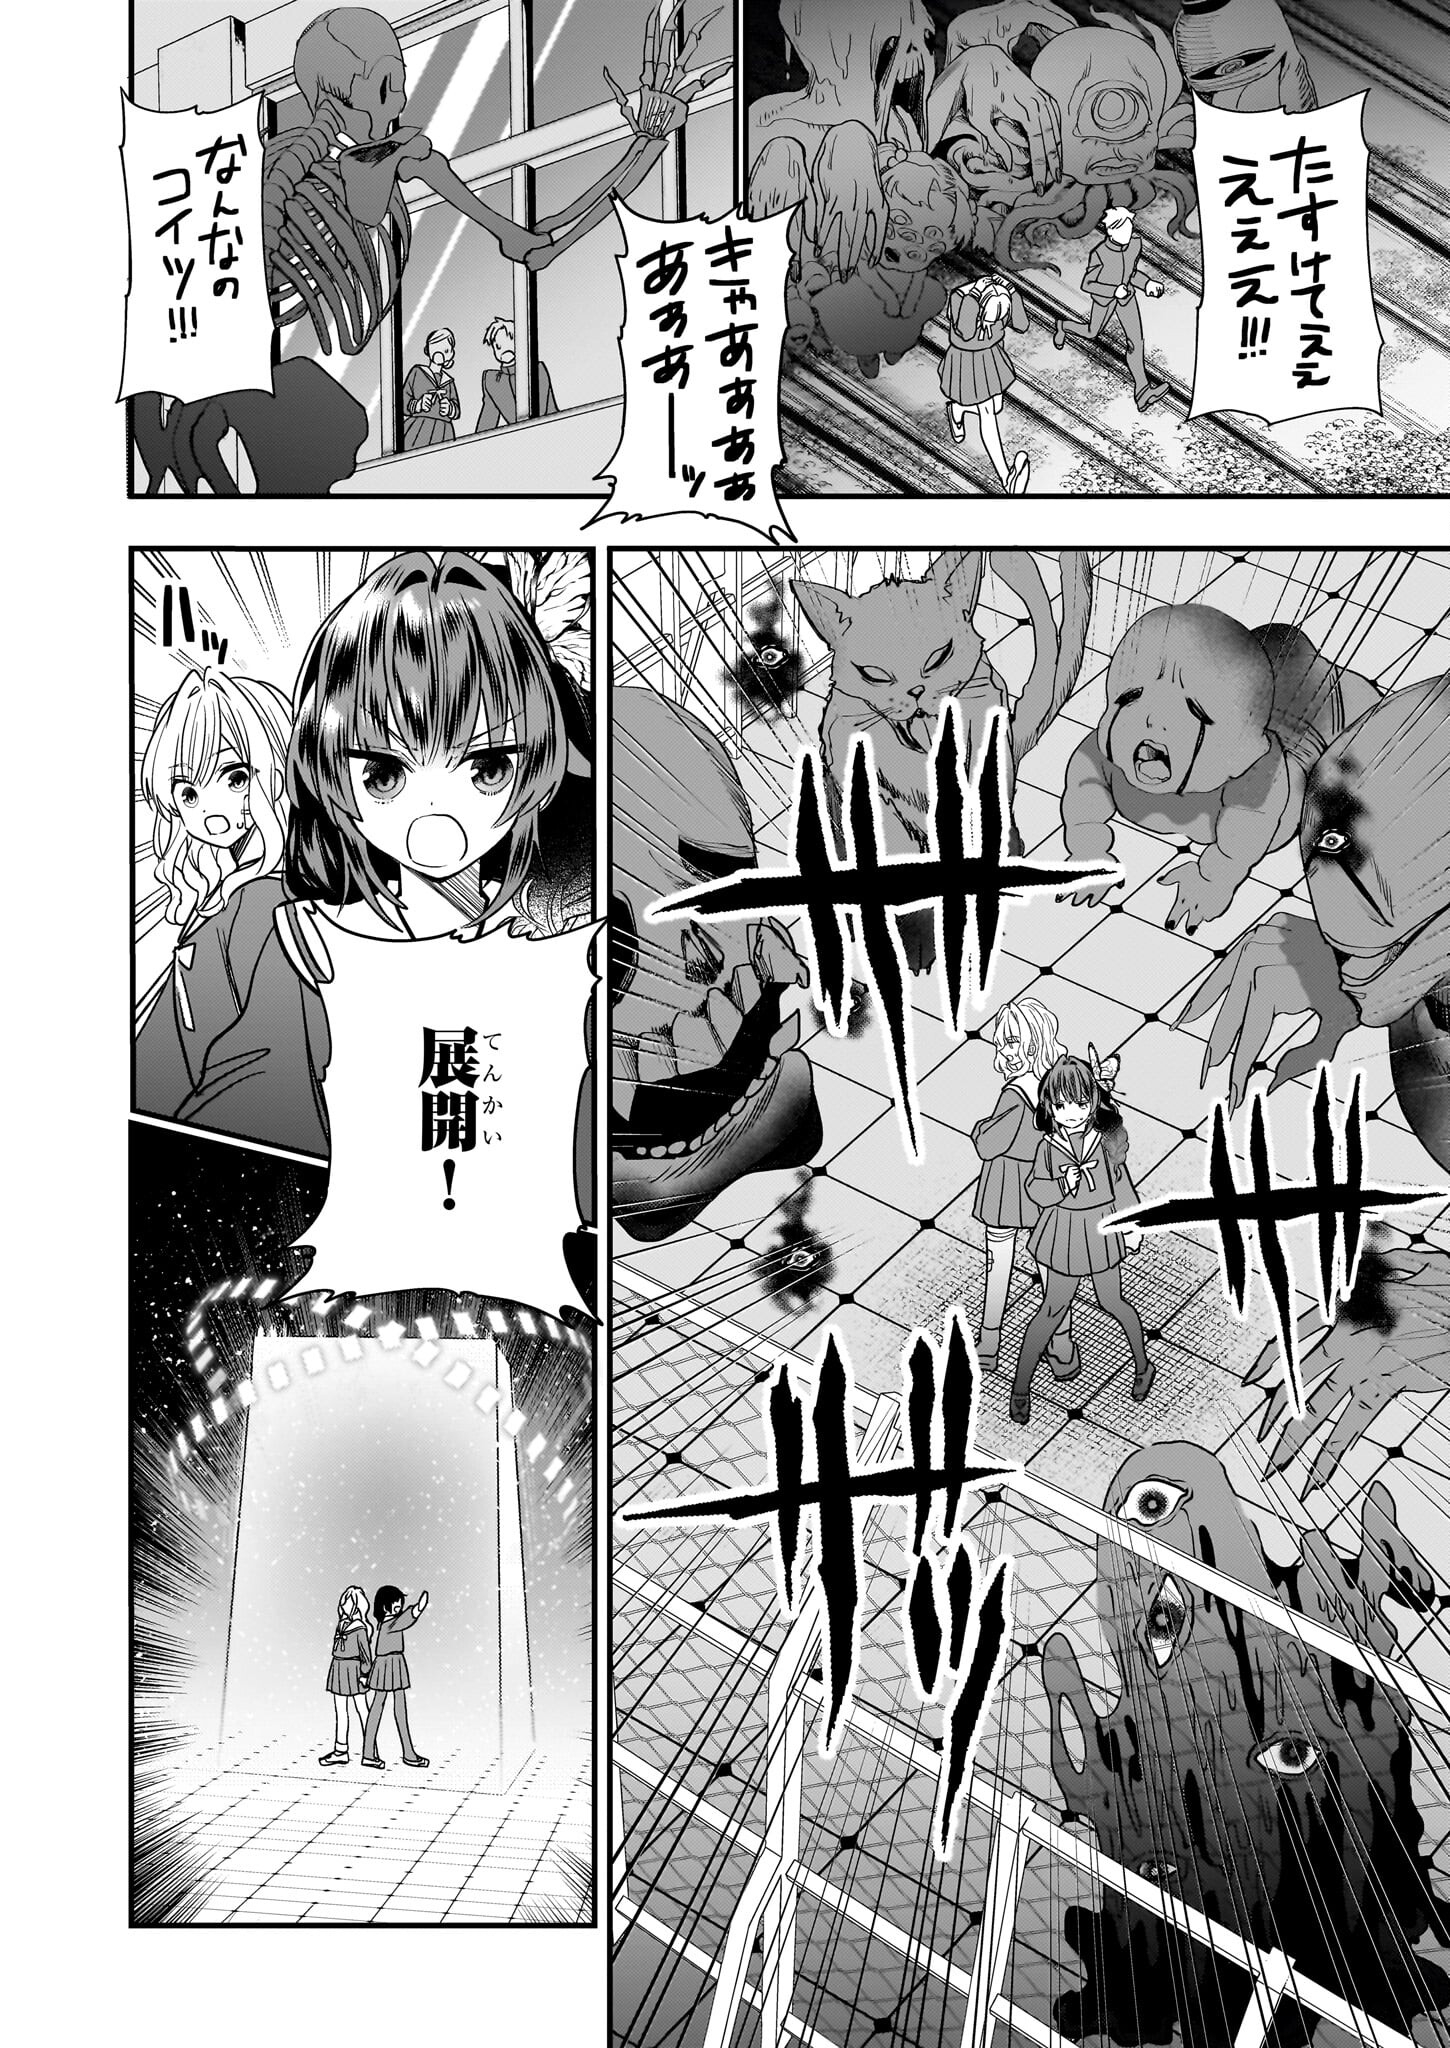 Kekkaishi no Ichirinka - Chapter 21 - Page 2